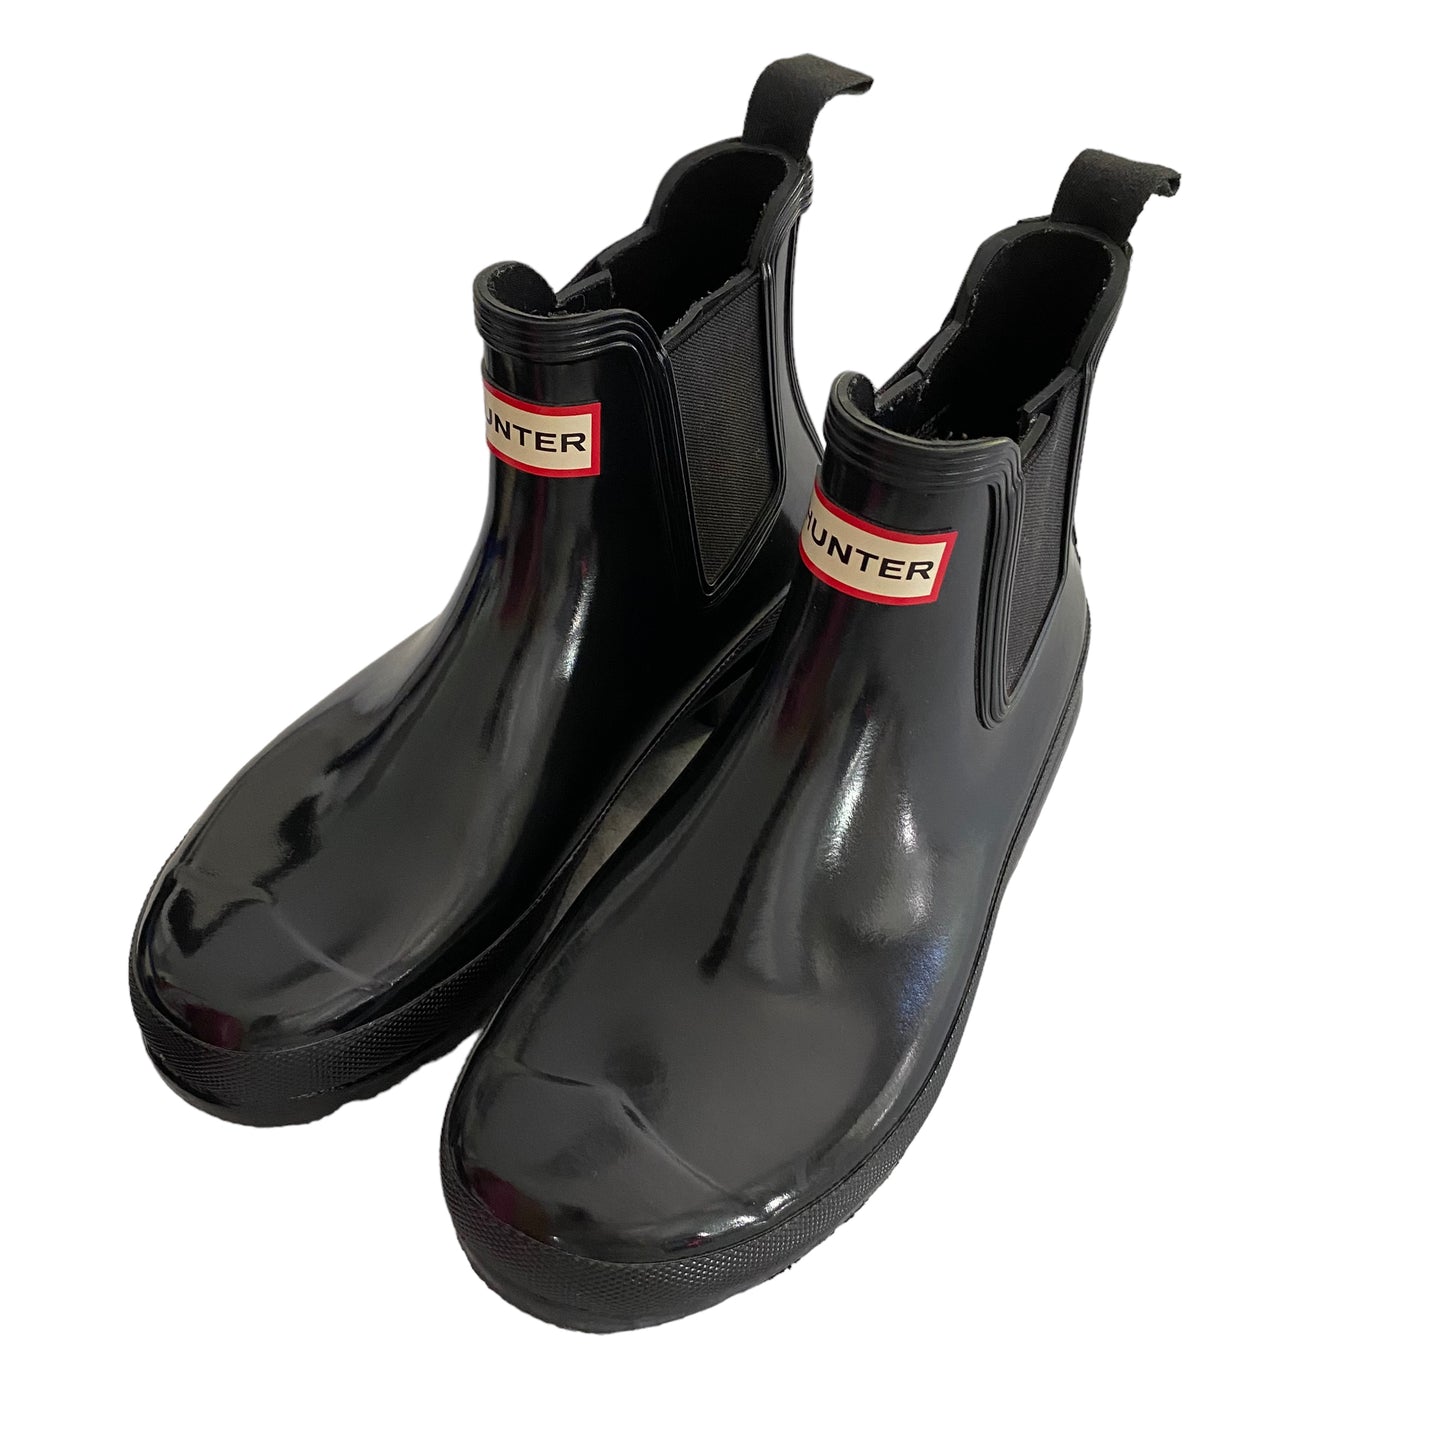 Hunter Chelsea Gloss Waterproof Rubber Rain Boots Size 7